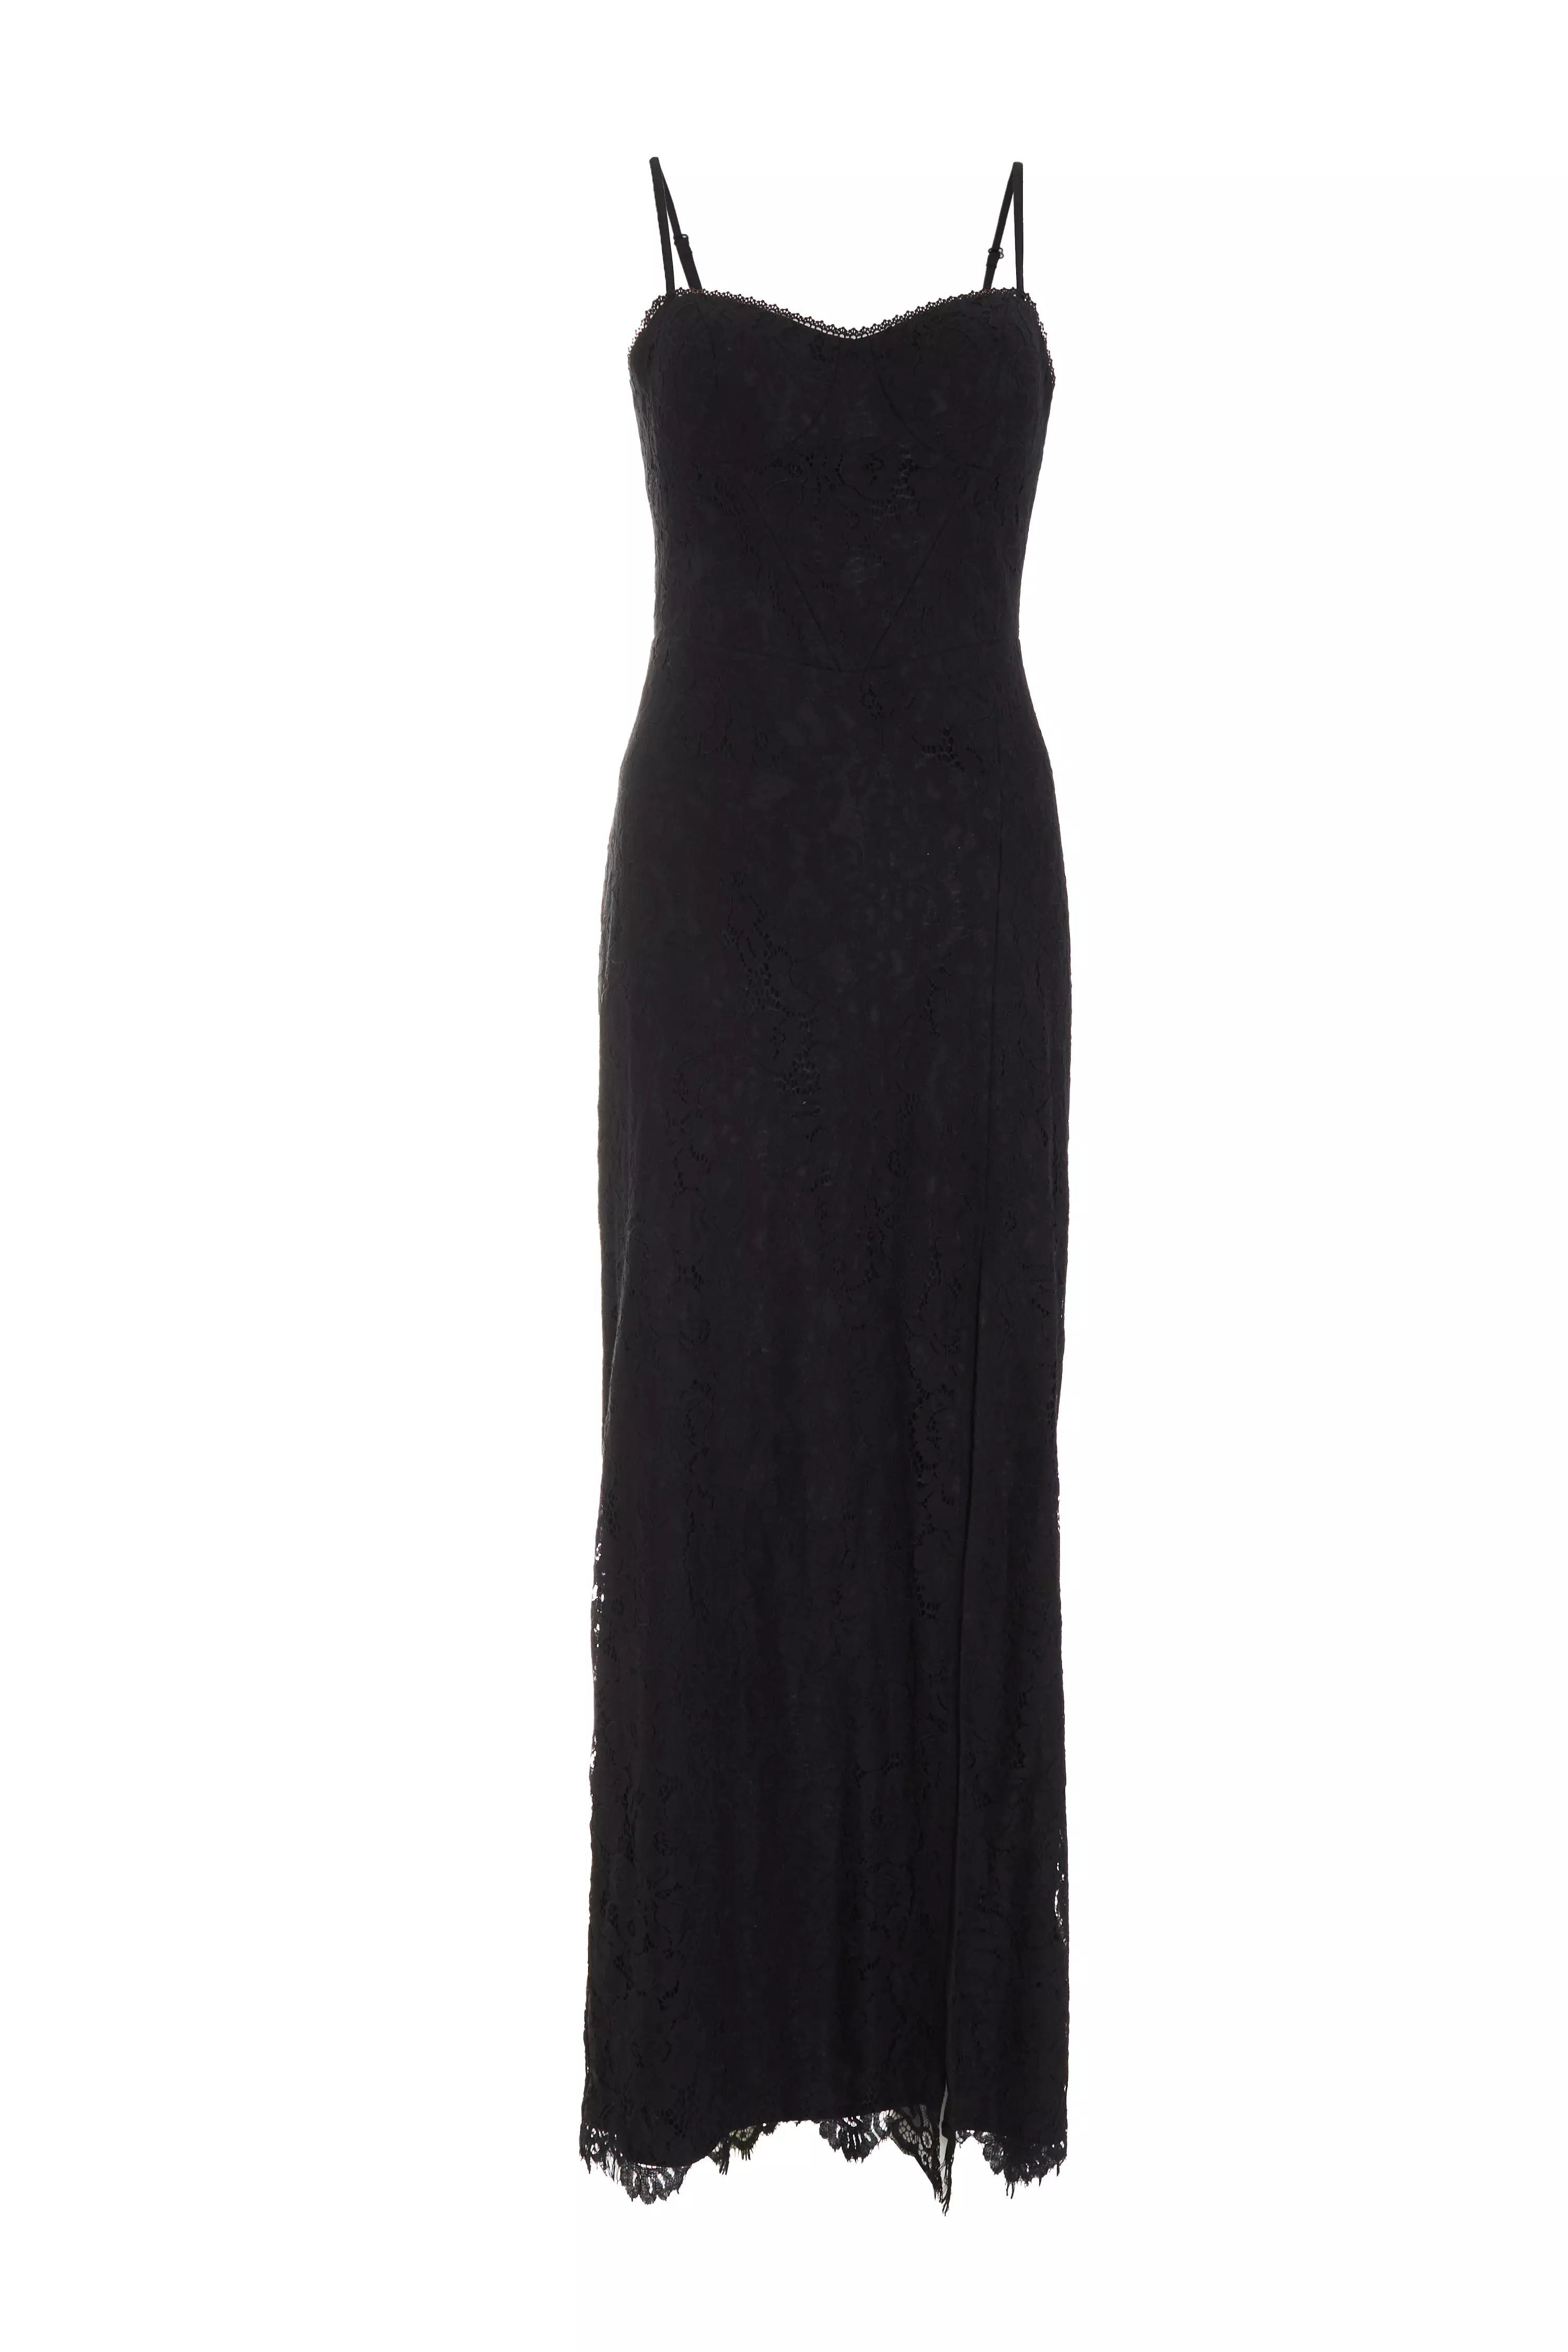 Black Lace Split Leg Maxi Dress - QUIZ Clothing